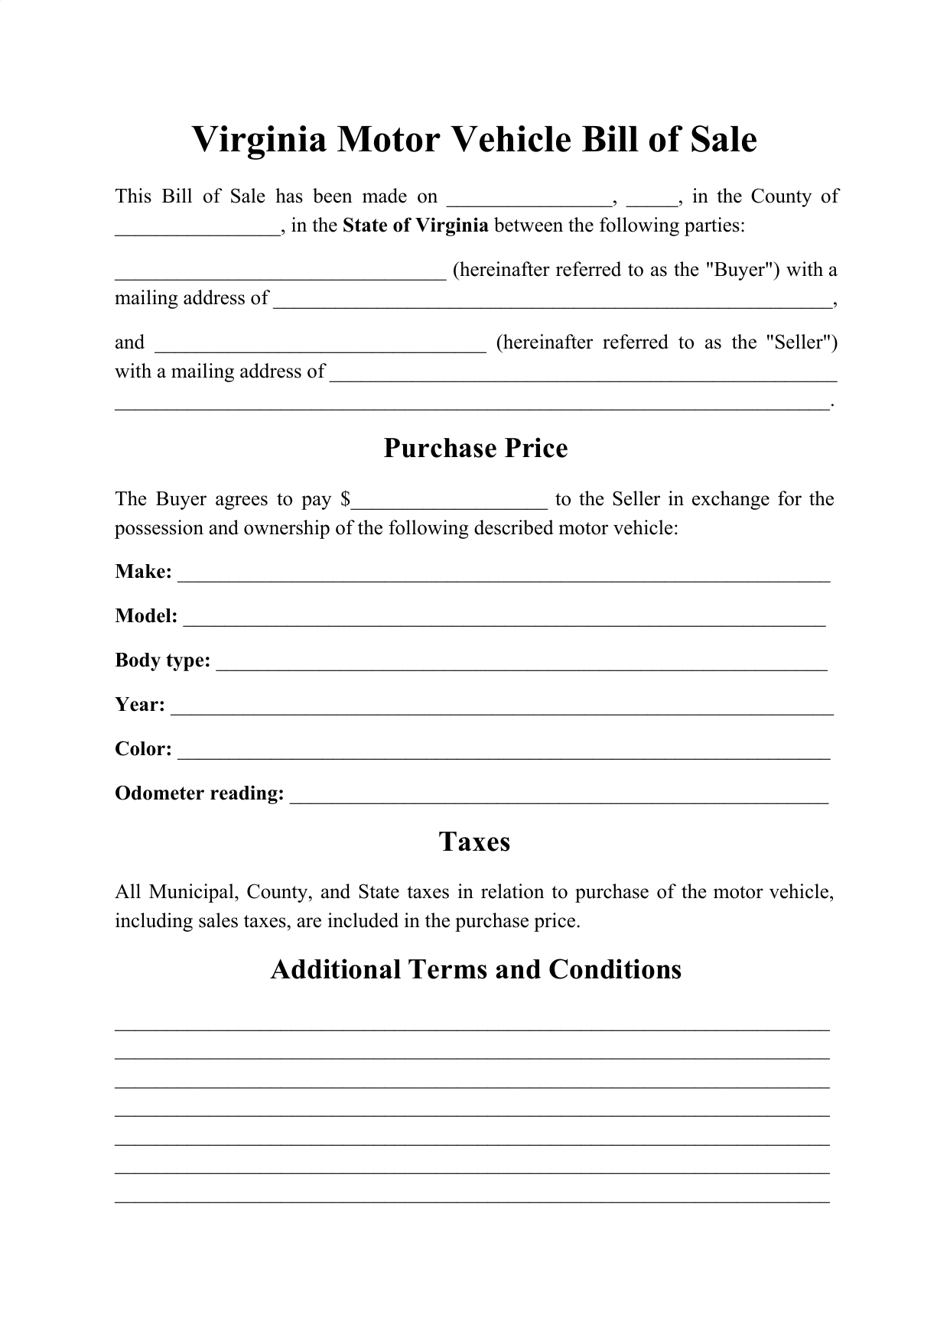 Virginia Motor Vehicle Bill of Sale Form Download Printable PDF